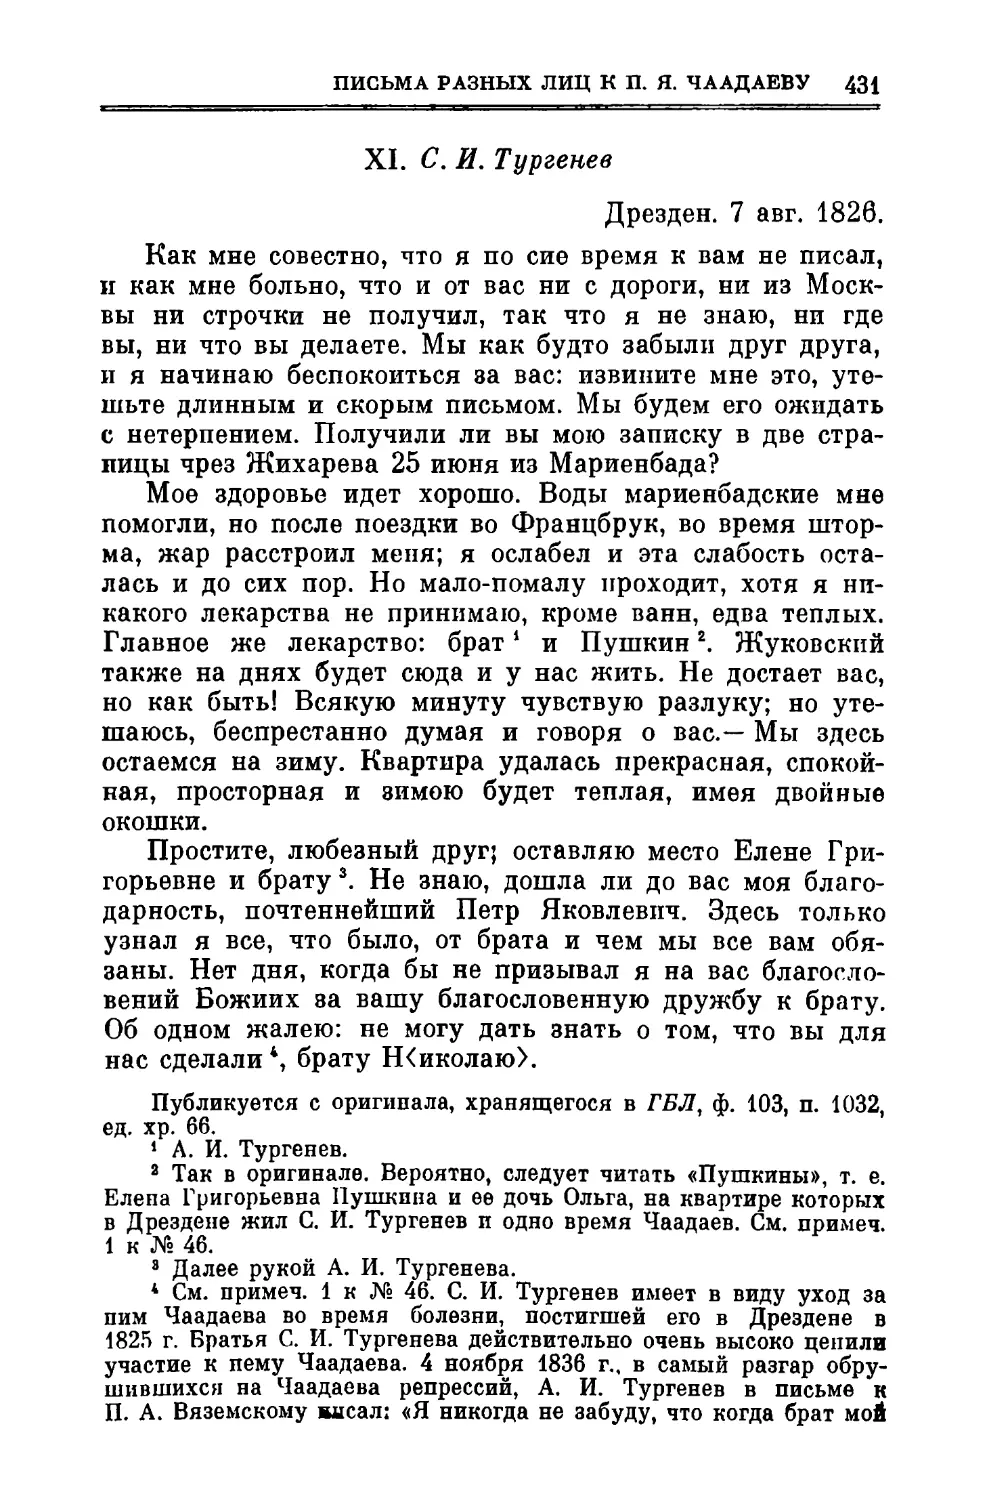 XI. Тургенев С.И. 7.VIII.1826